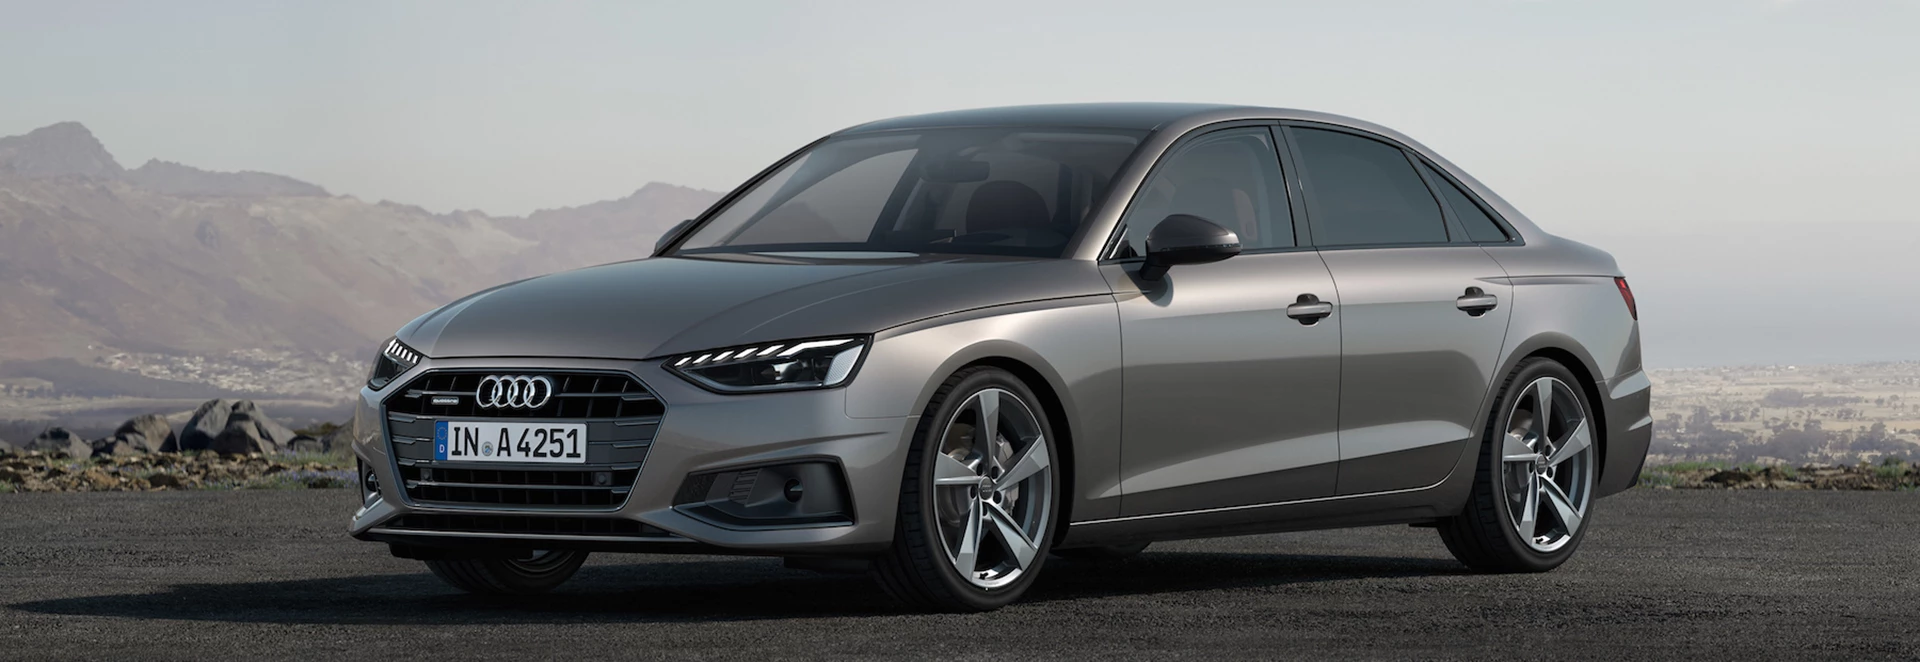 Audi A4 2019 review